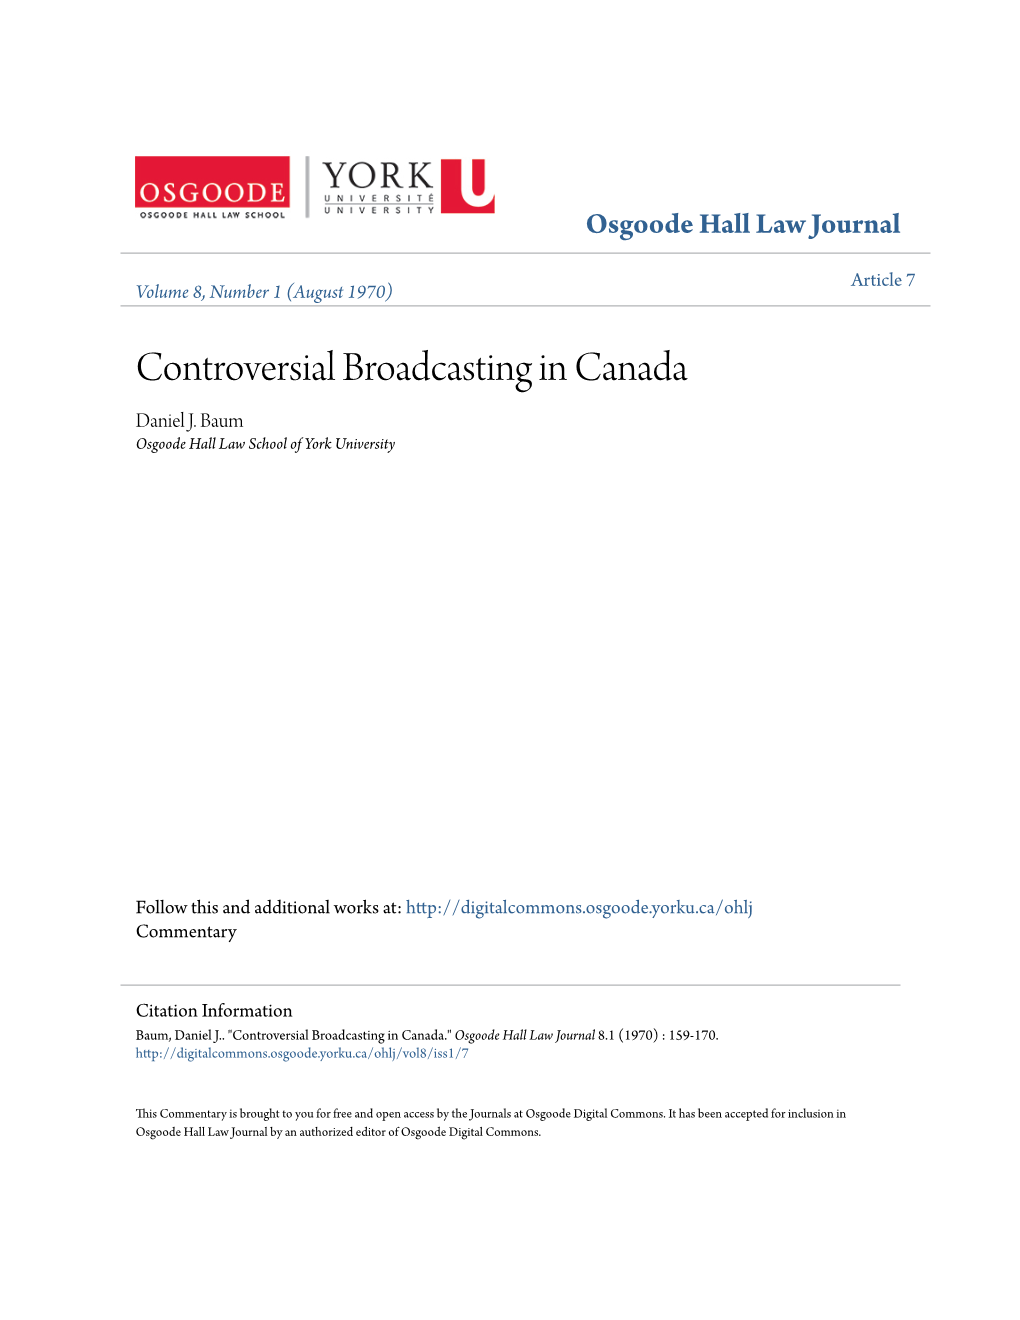 Controversial Broadcasting in Canada Daniel J